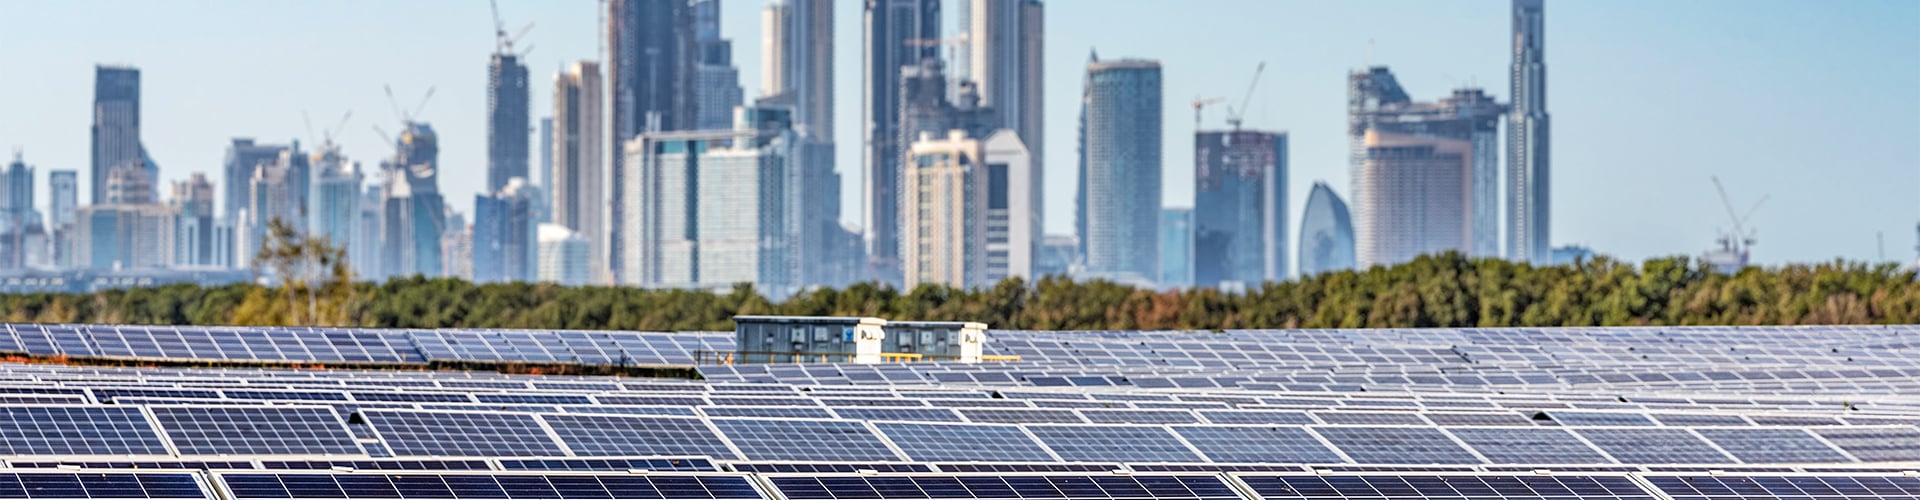 city-based solar panels